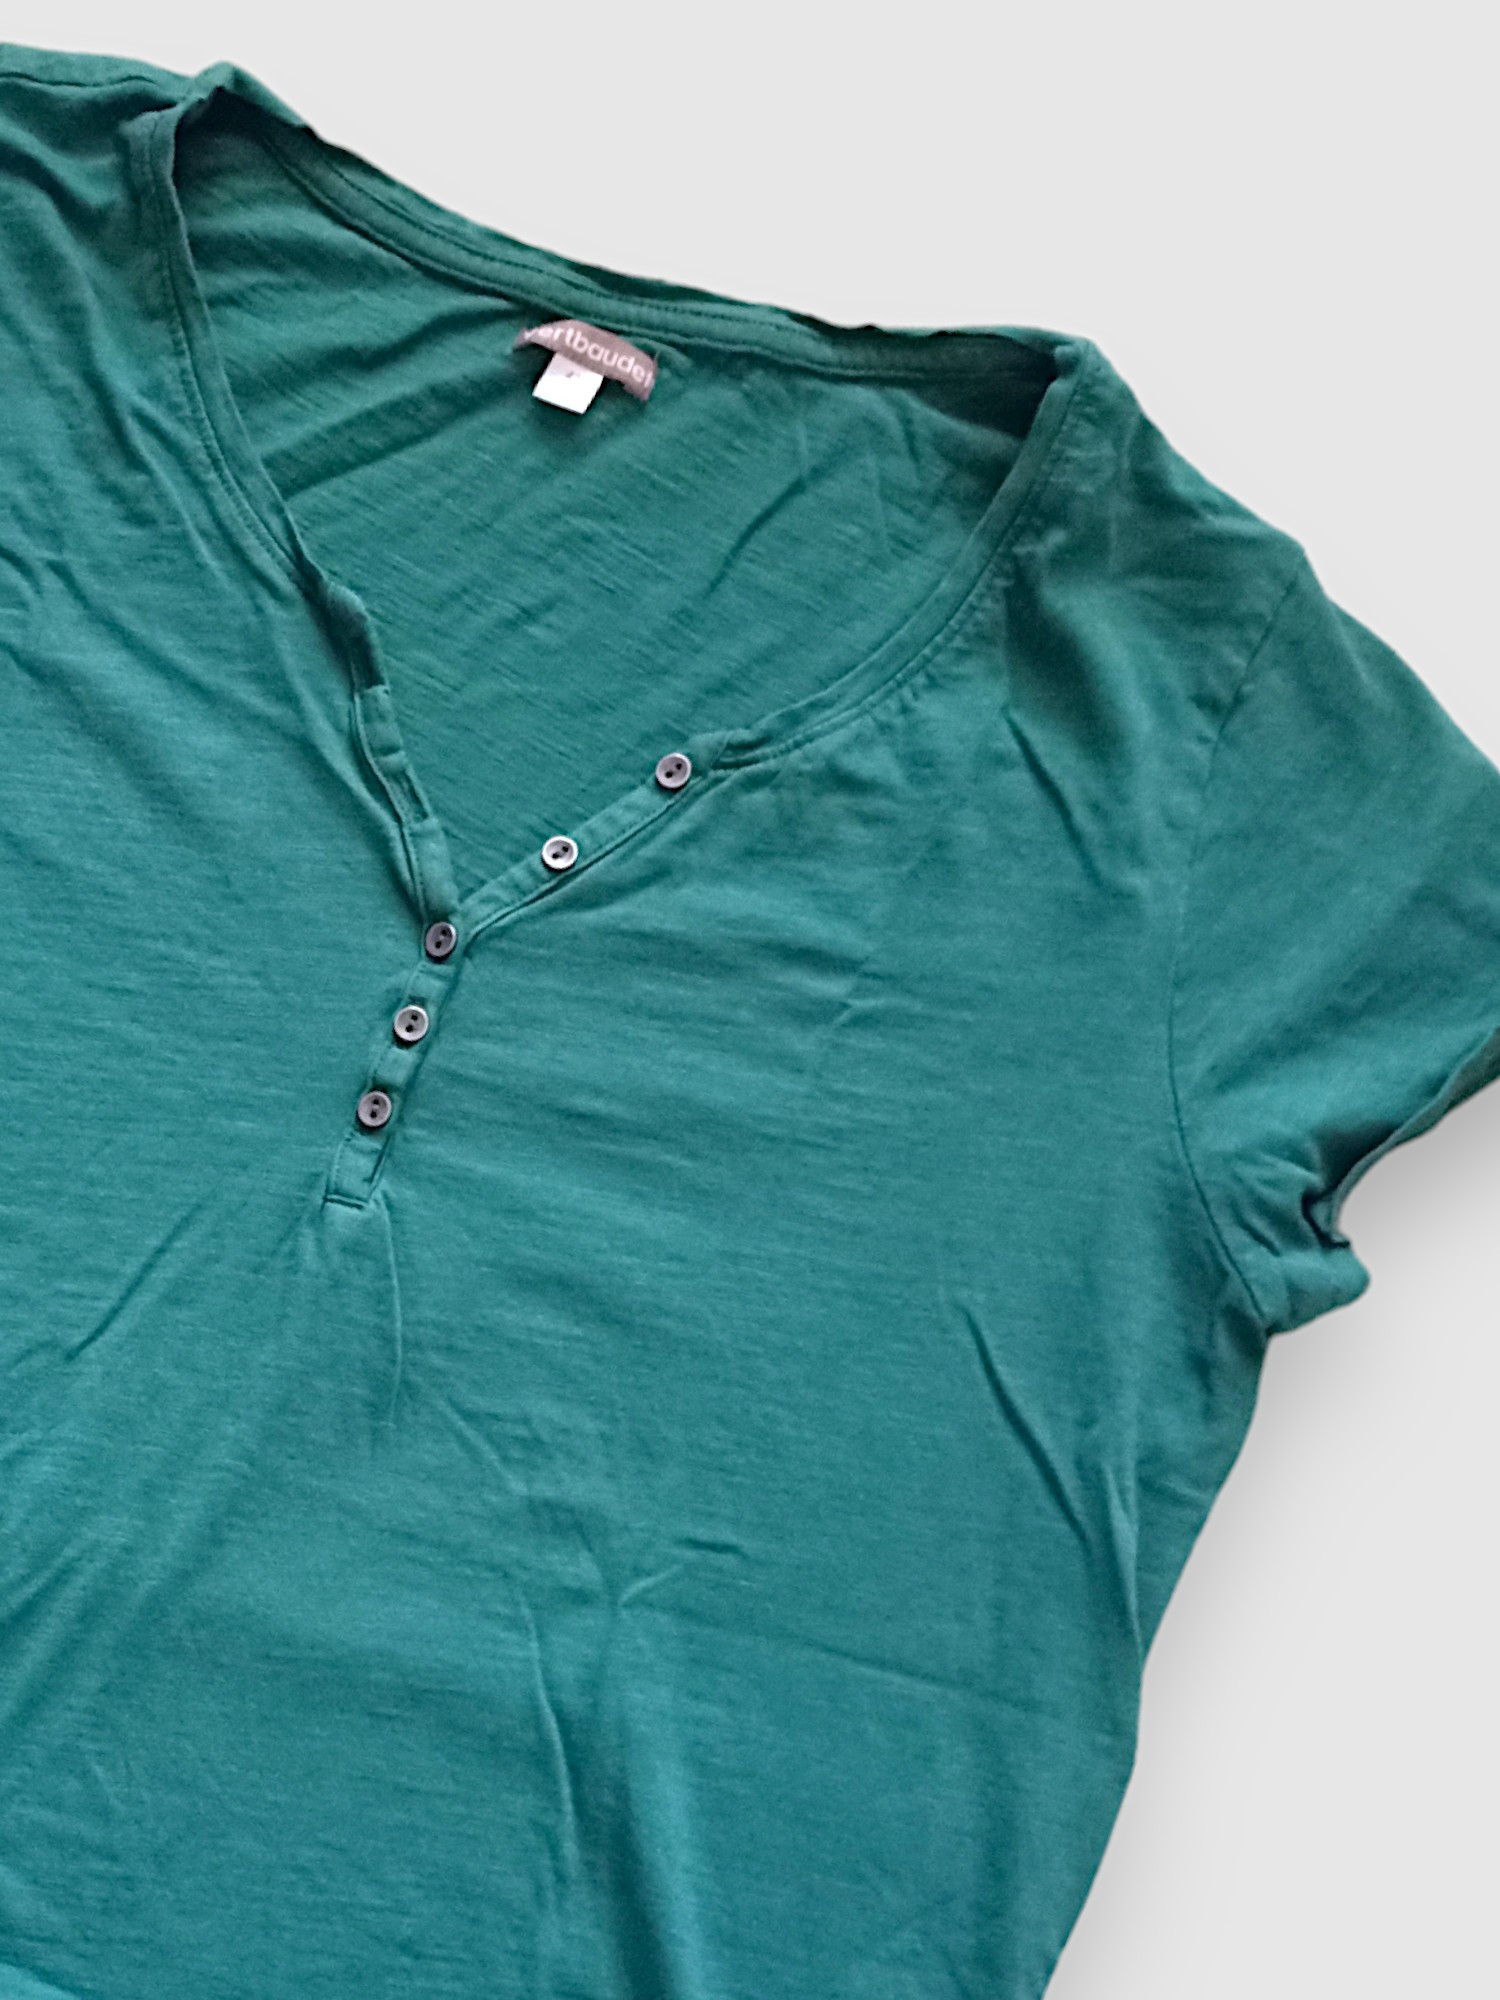 Verbaudet maternity t-shirt - lichen green - size L